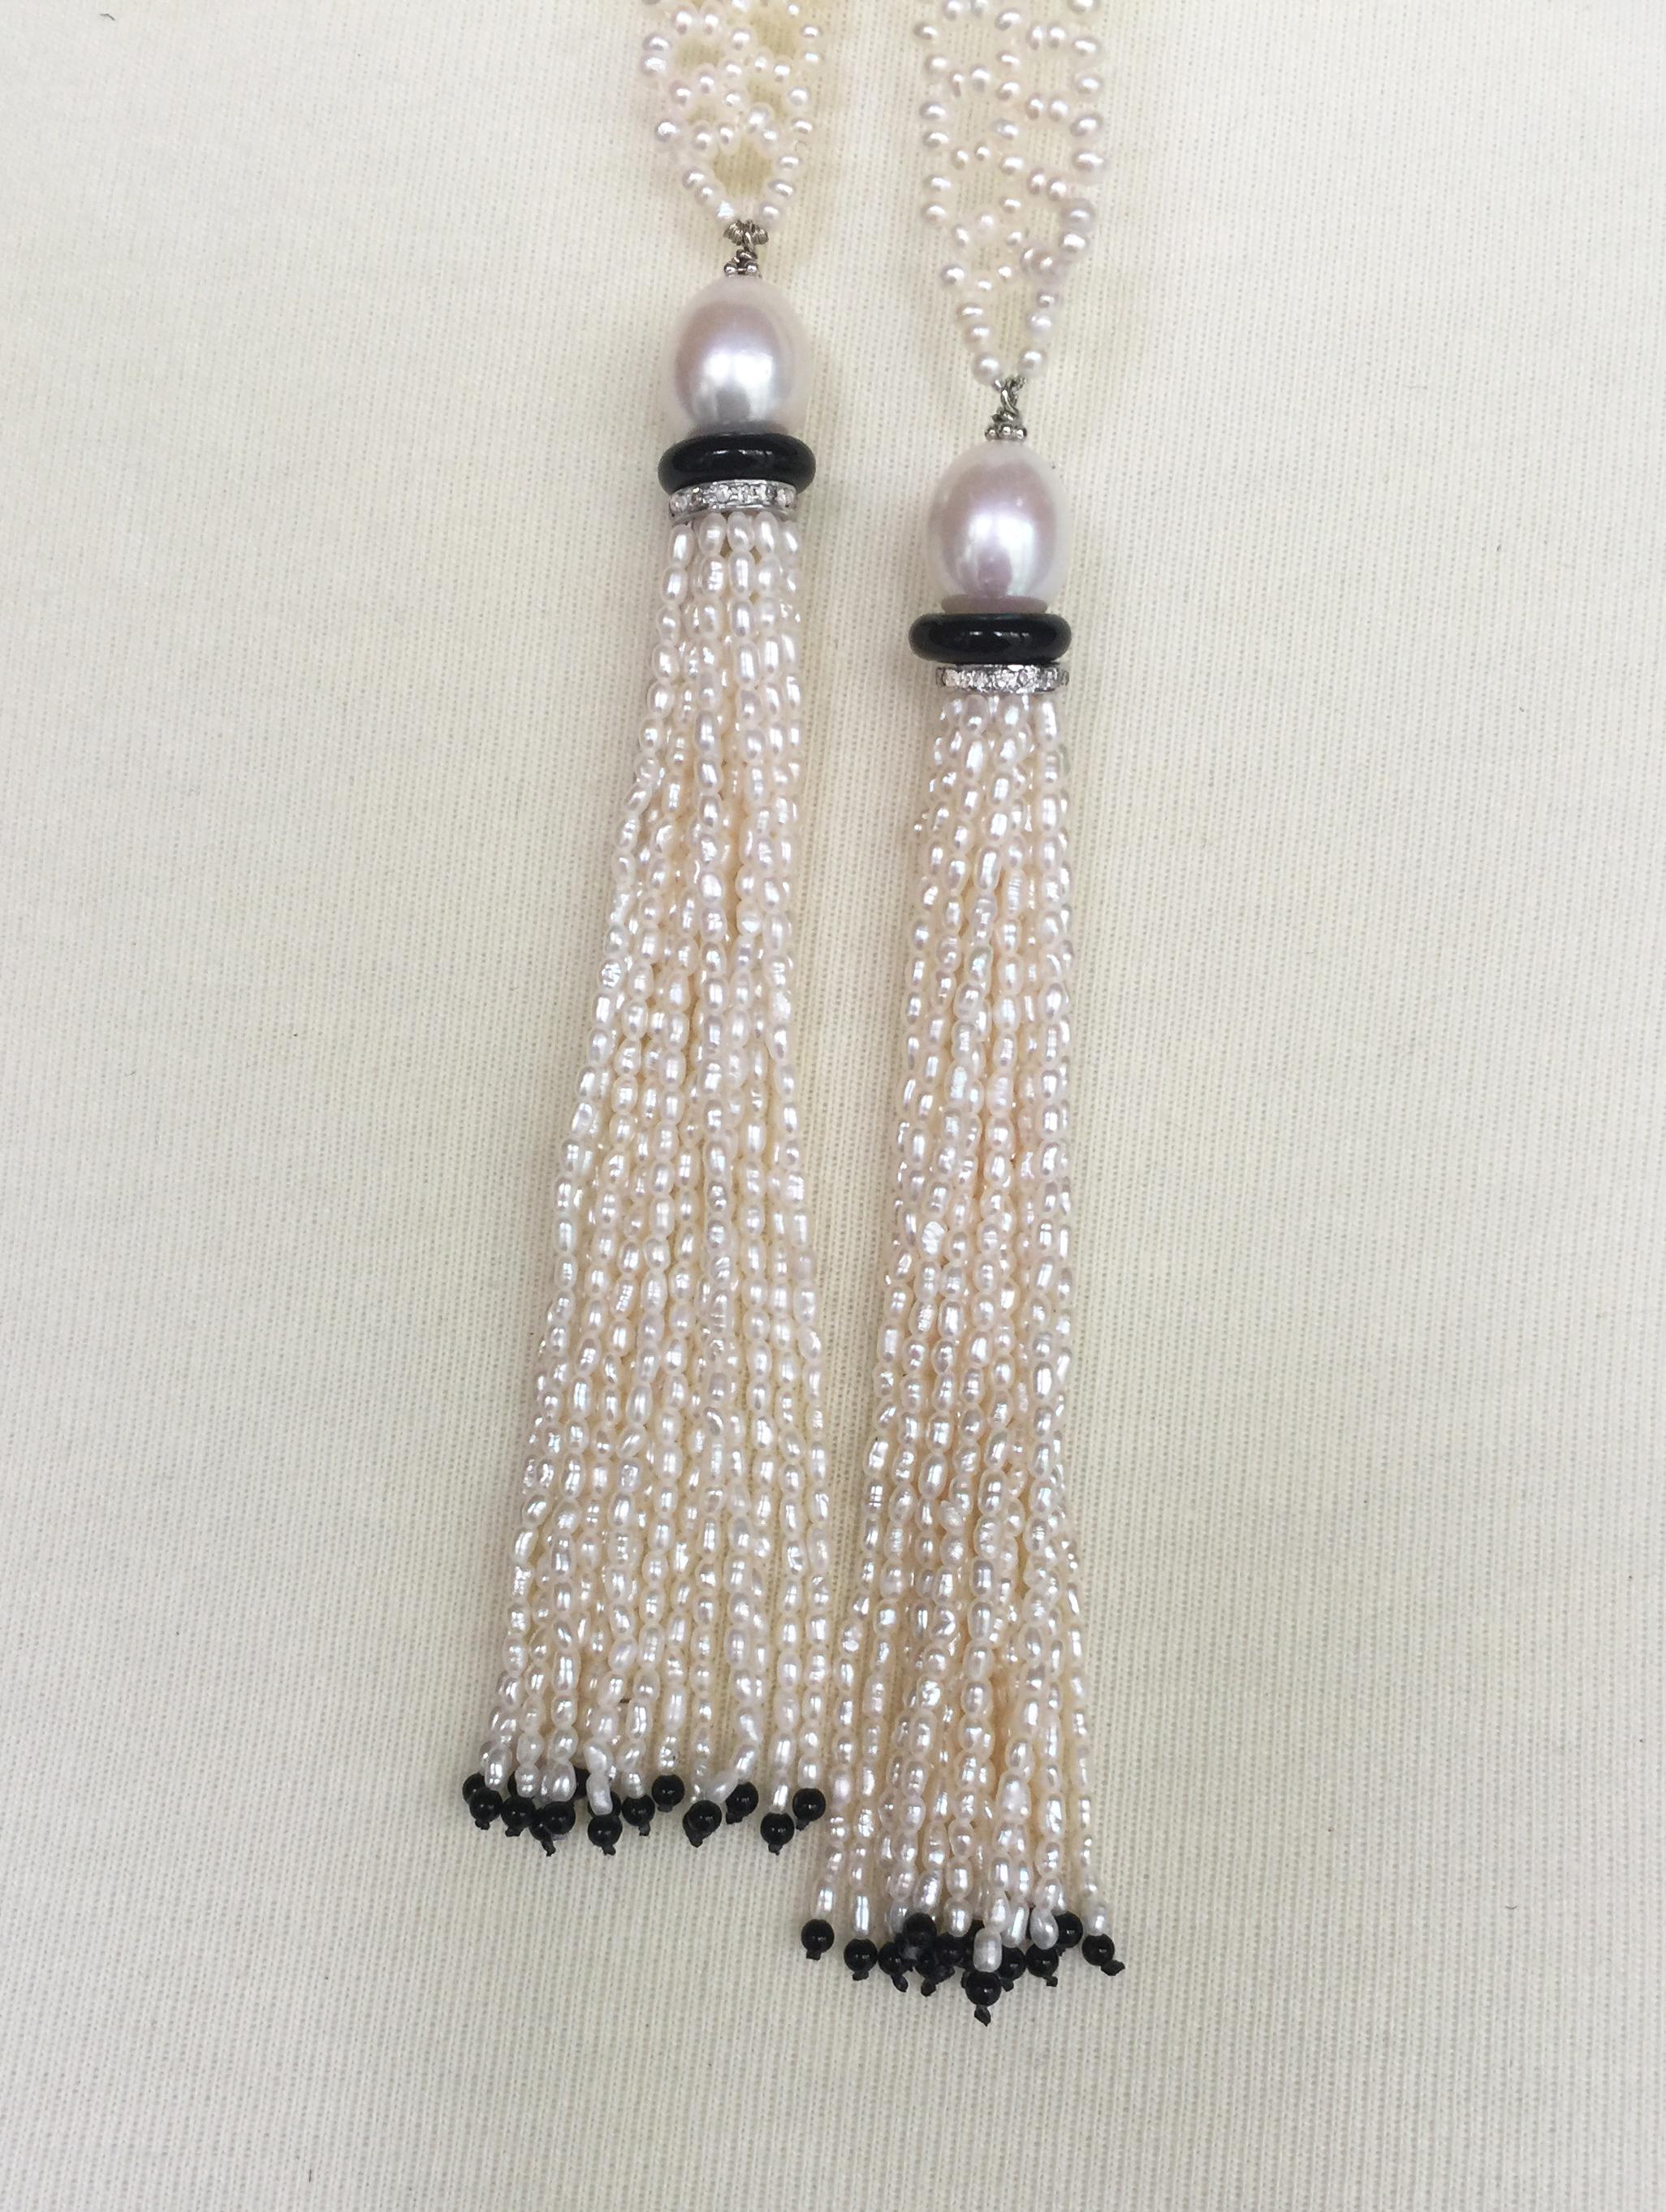 Artist Marina J. Woven Seed Pearl Sautoir Necklace with Pearl, Onyx and Diamond Tassels